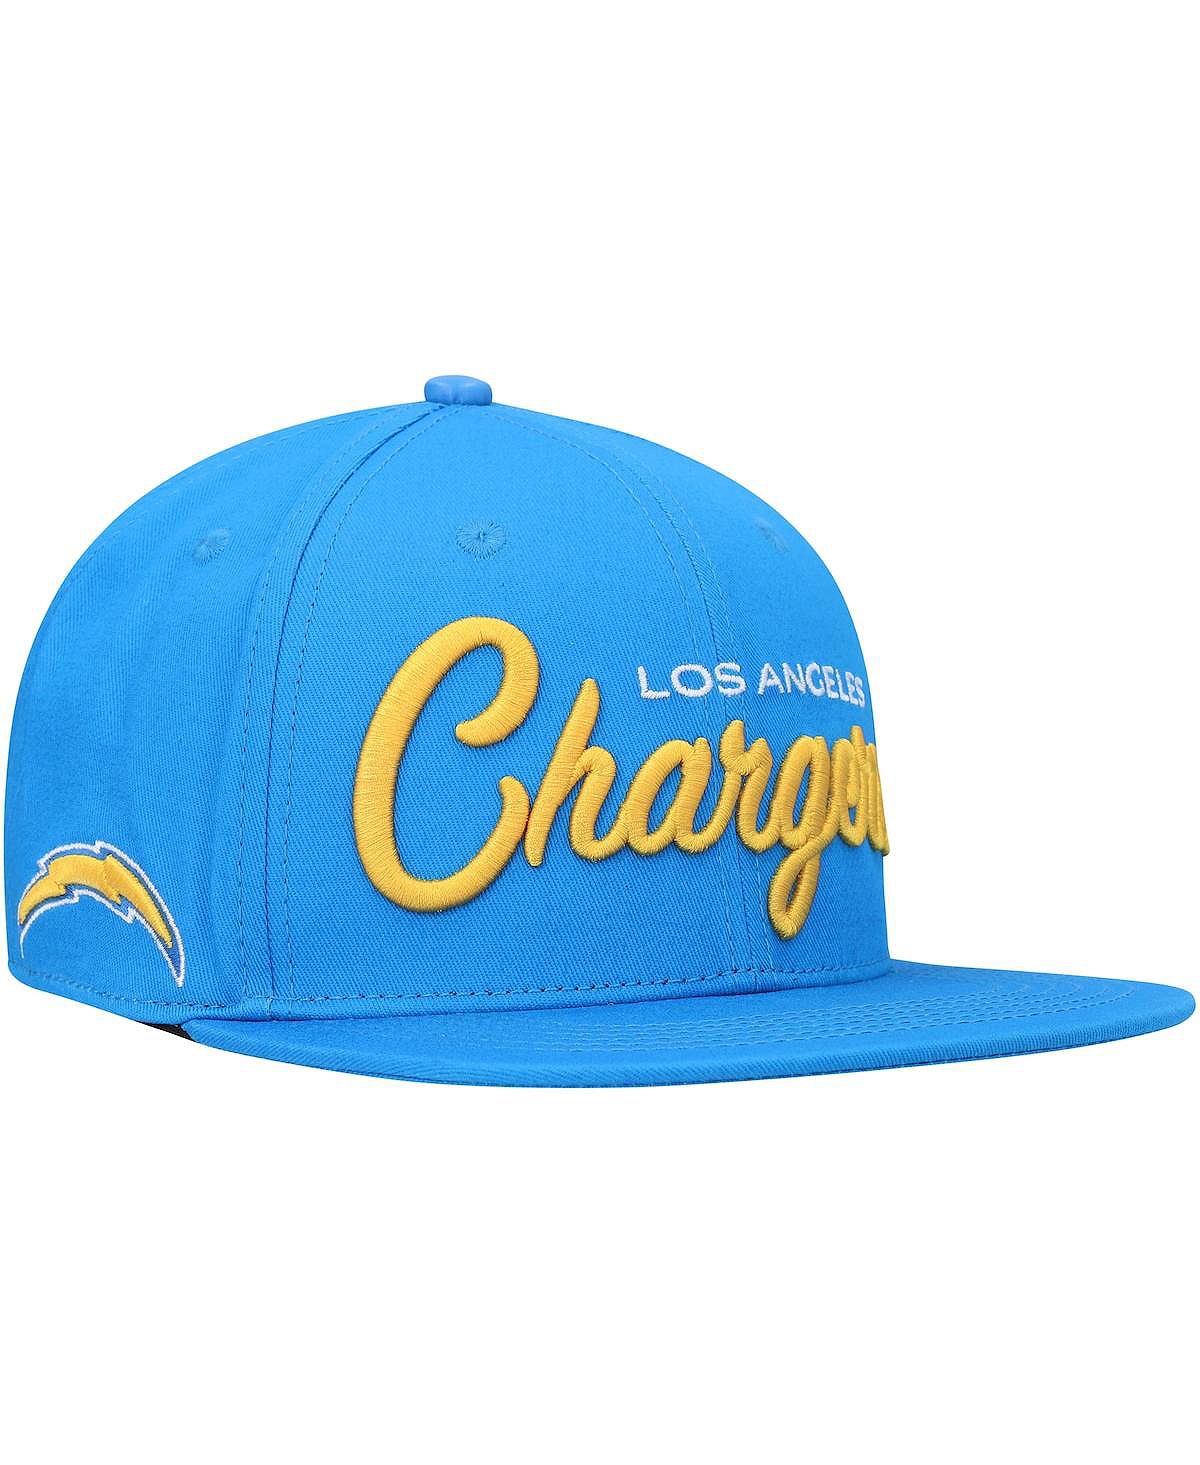 Мужская кепка Snapback с надписью Los Angeles Chargers пудрово-синего цвета Pro Standard